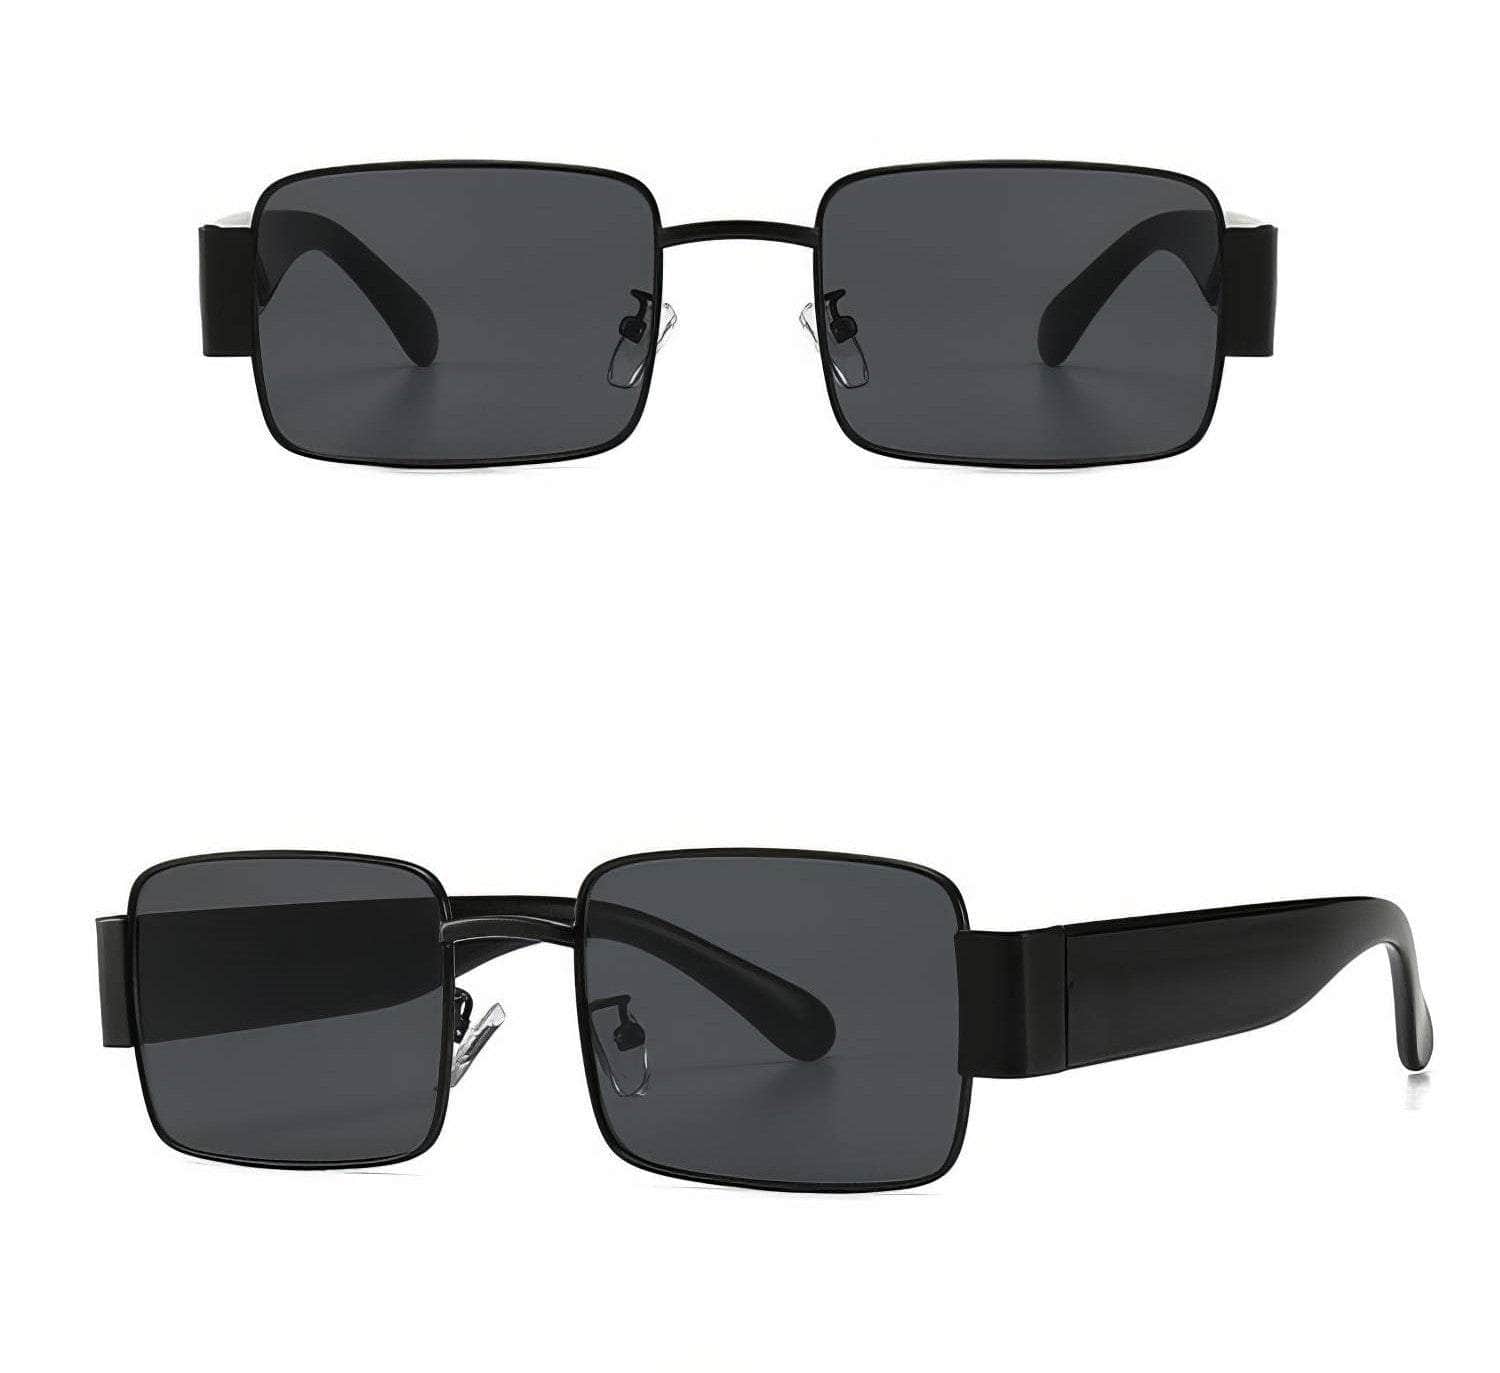 Big Square Transparent Sunglasses Black Gray / Resin